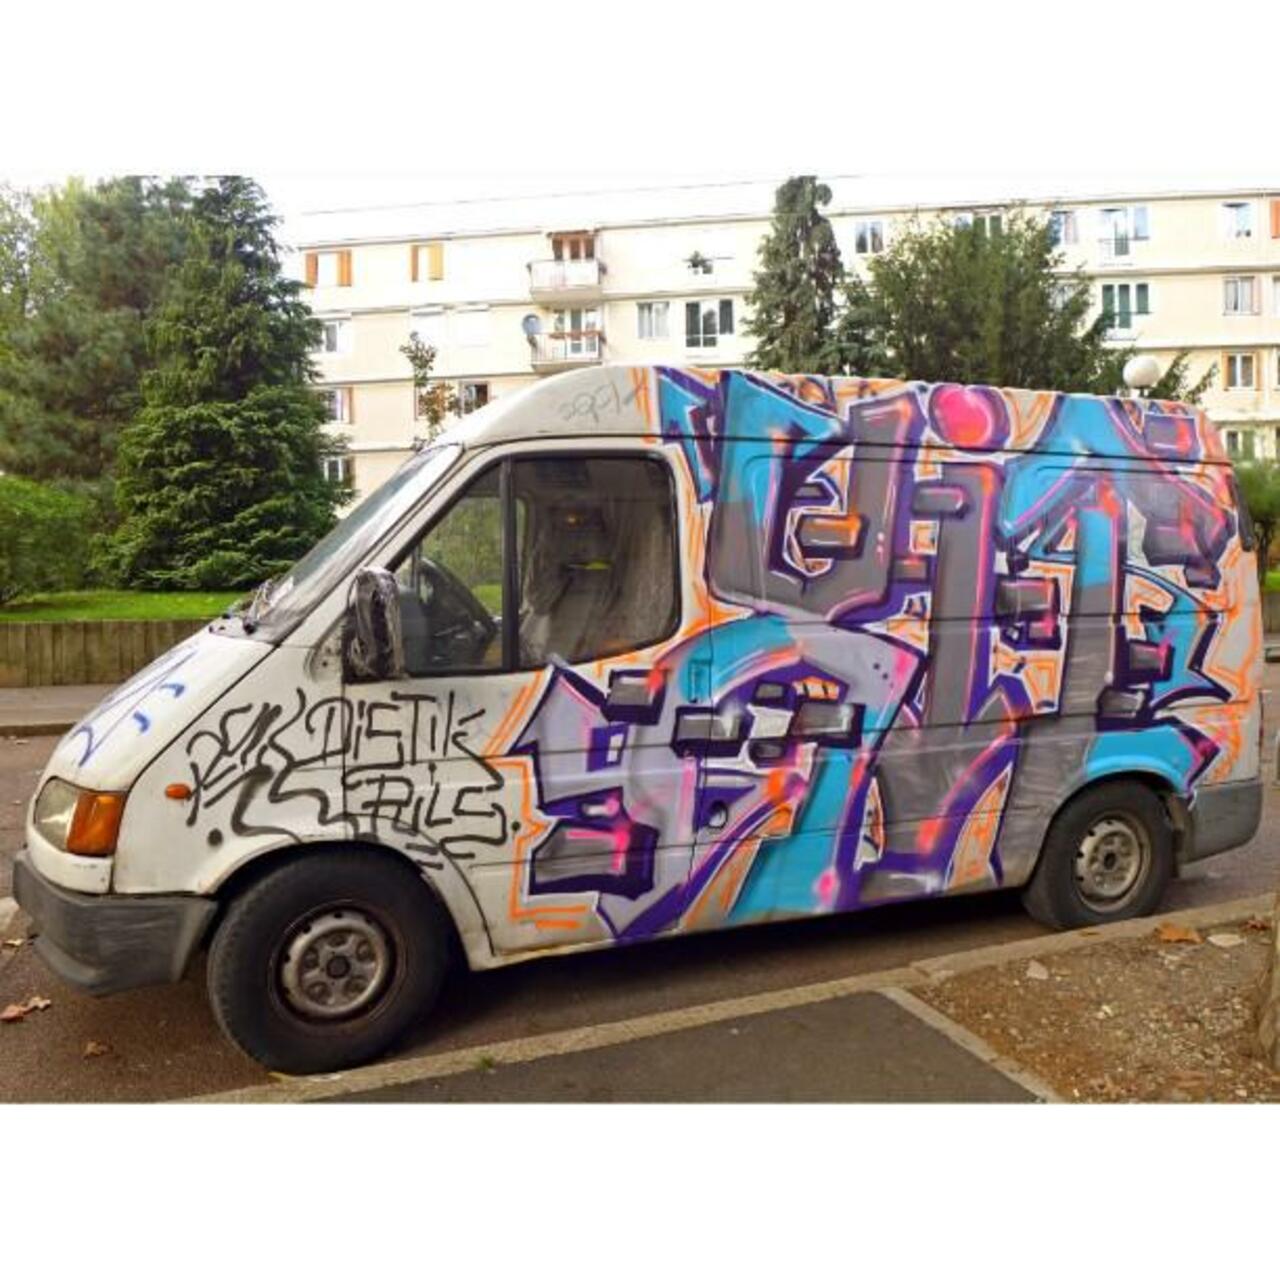 #Paris #graffiti photo by @maxdimontemarciano http://ift.tt/1jA1wHa #StreetArt http://t.co/5erhG7LKF8